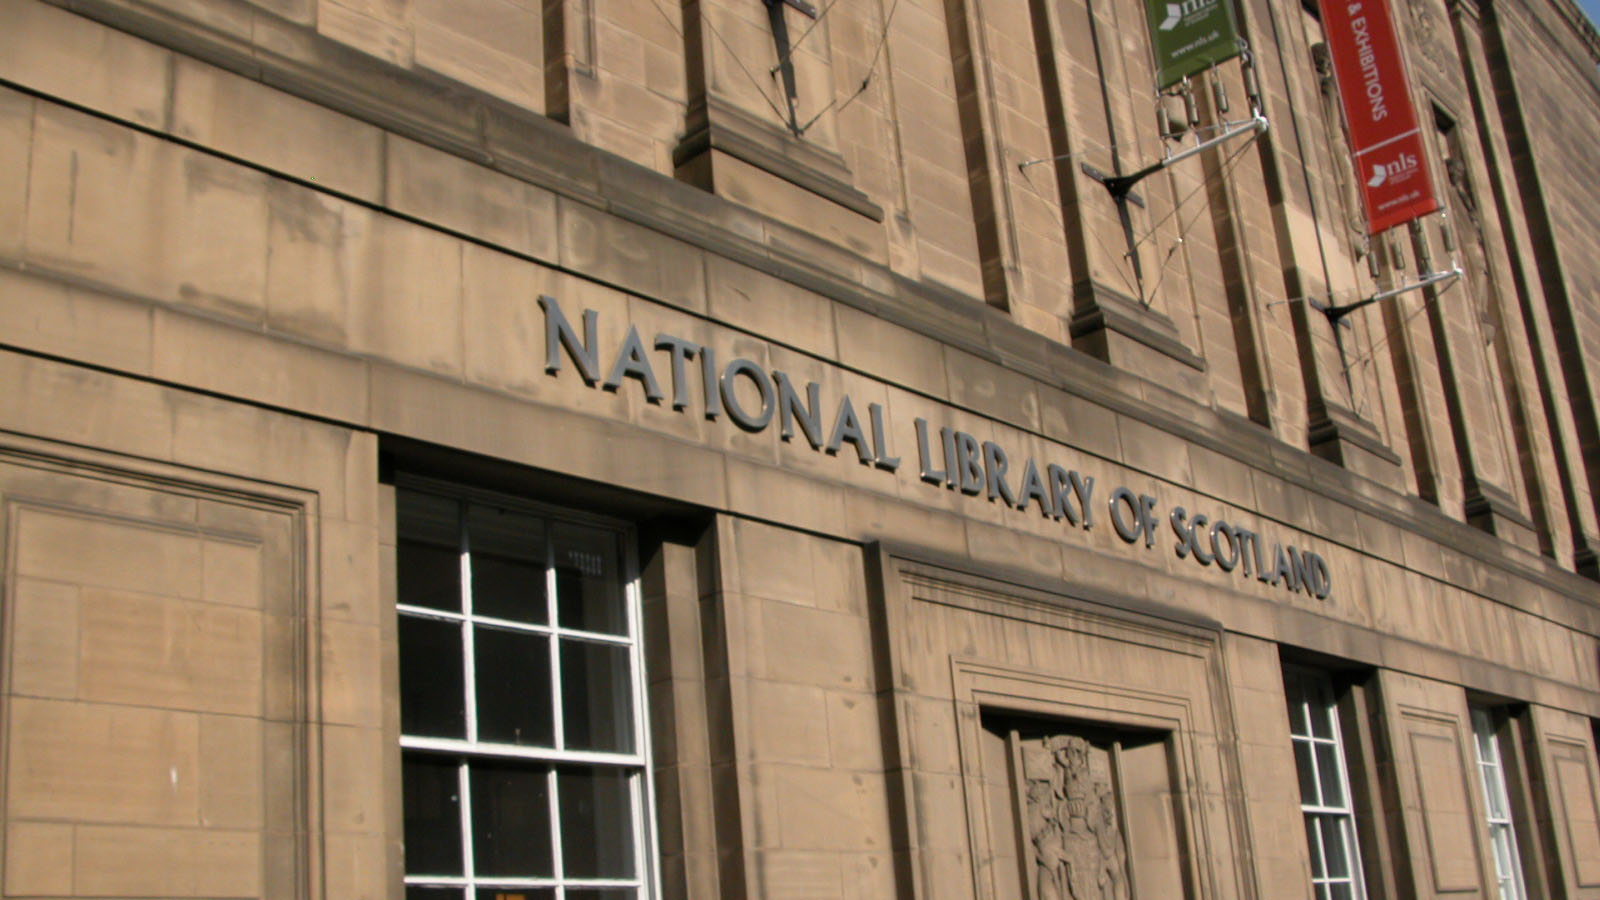 The National Library of Scotland, Edinburgh, 2010. Courtesy of the National Library of Scotland.